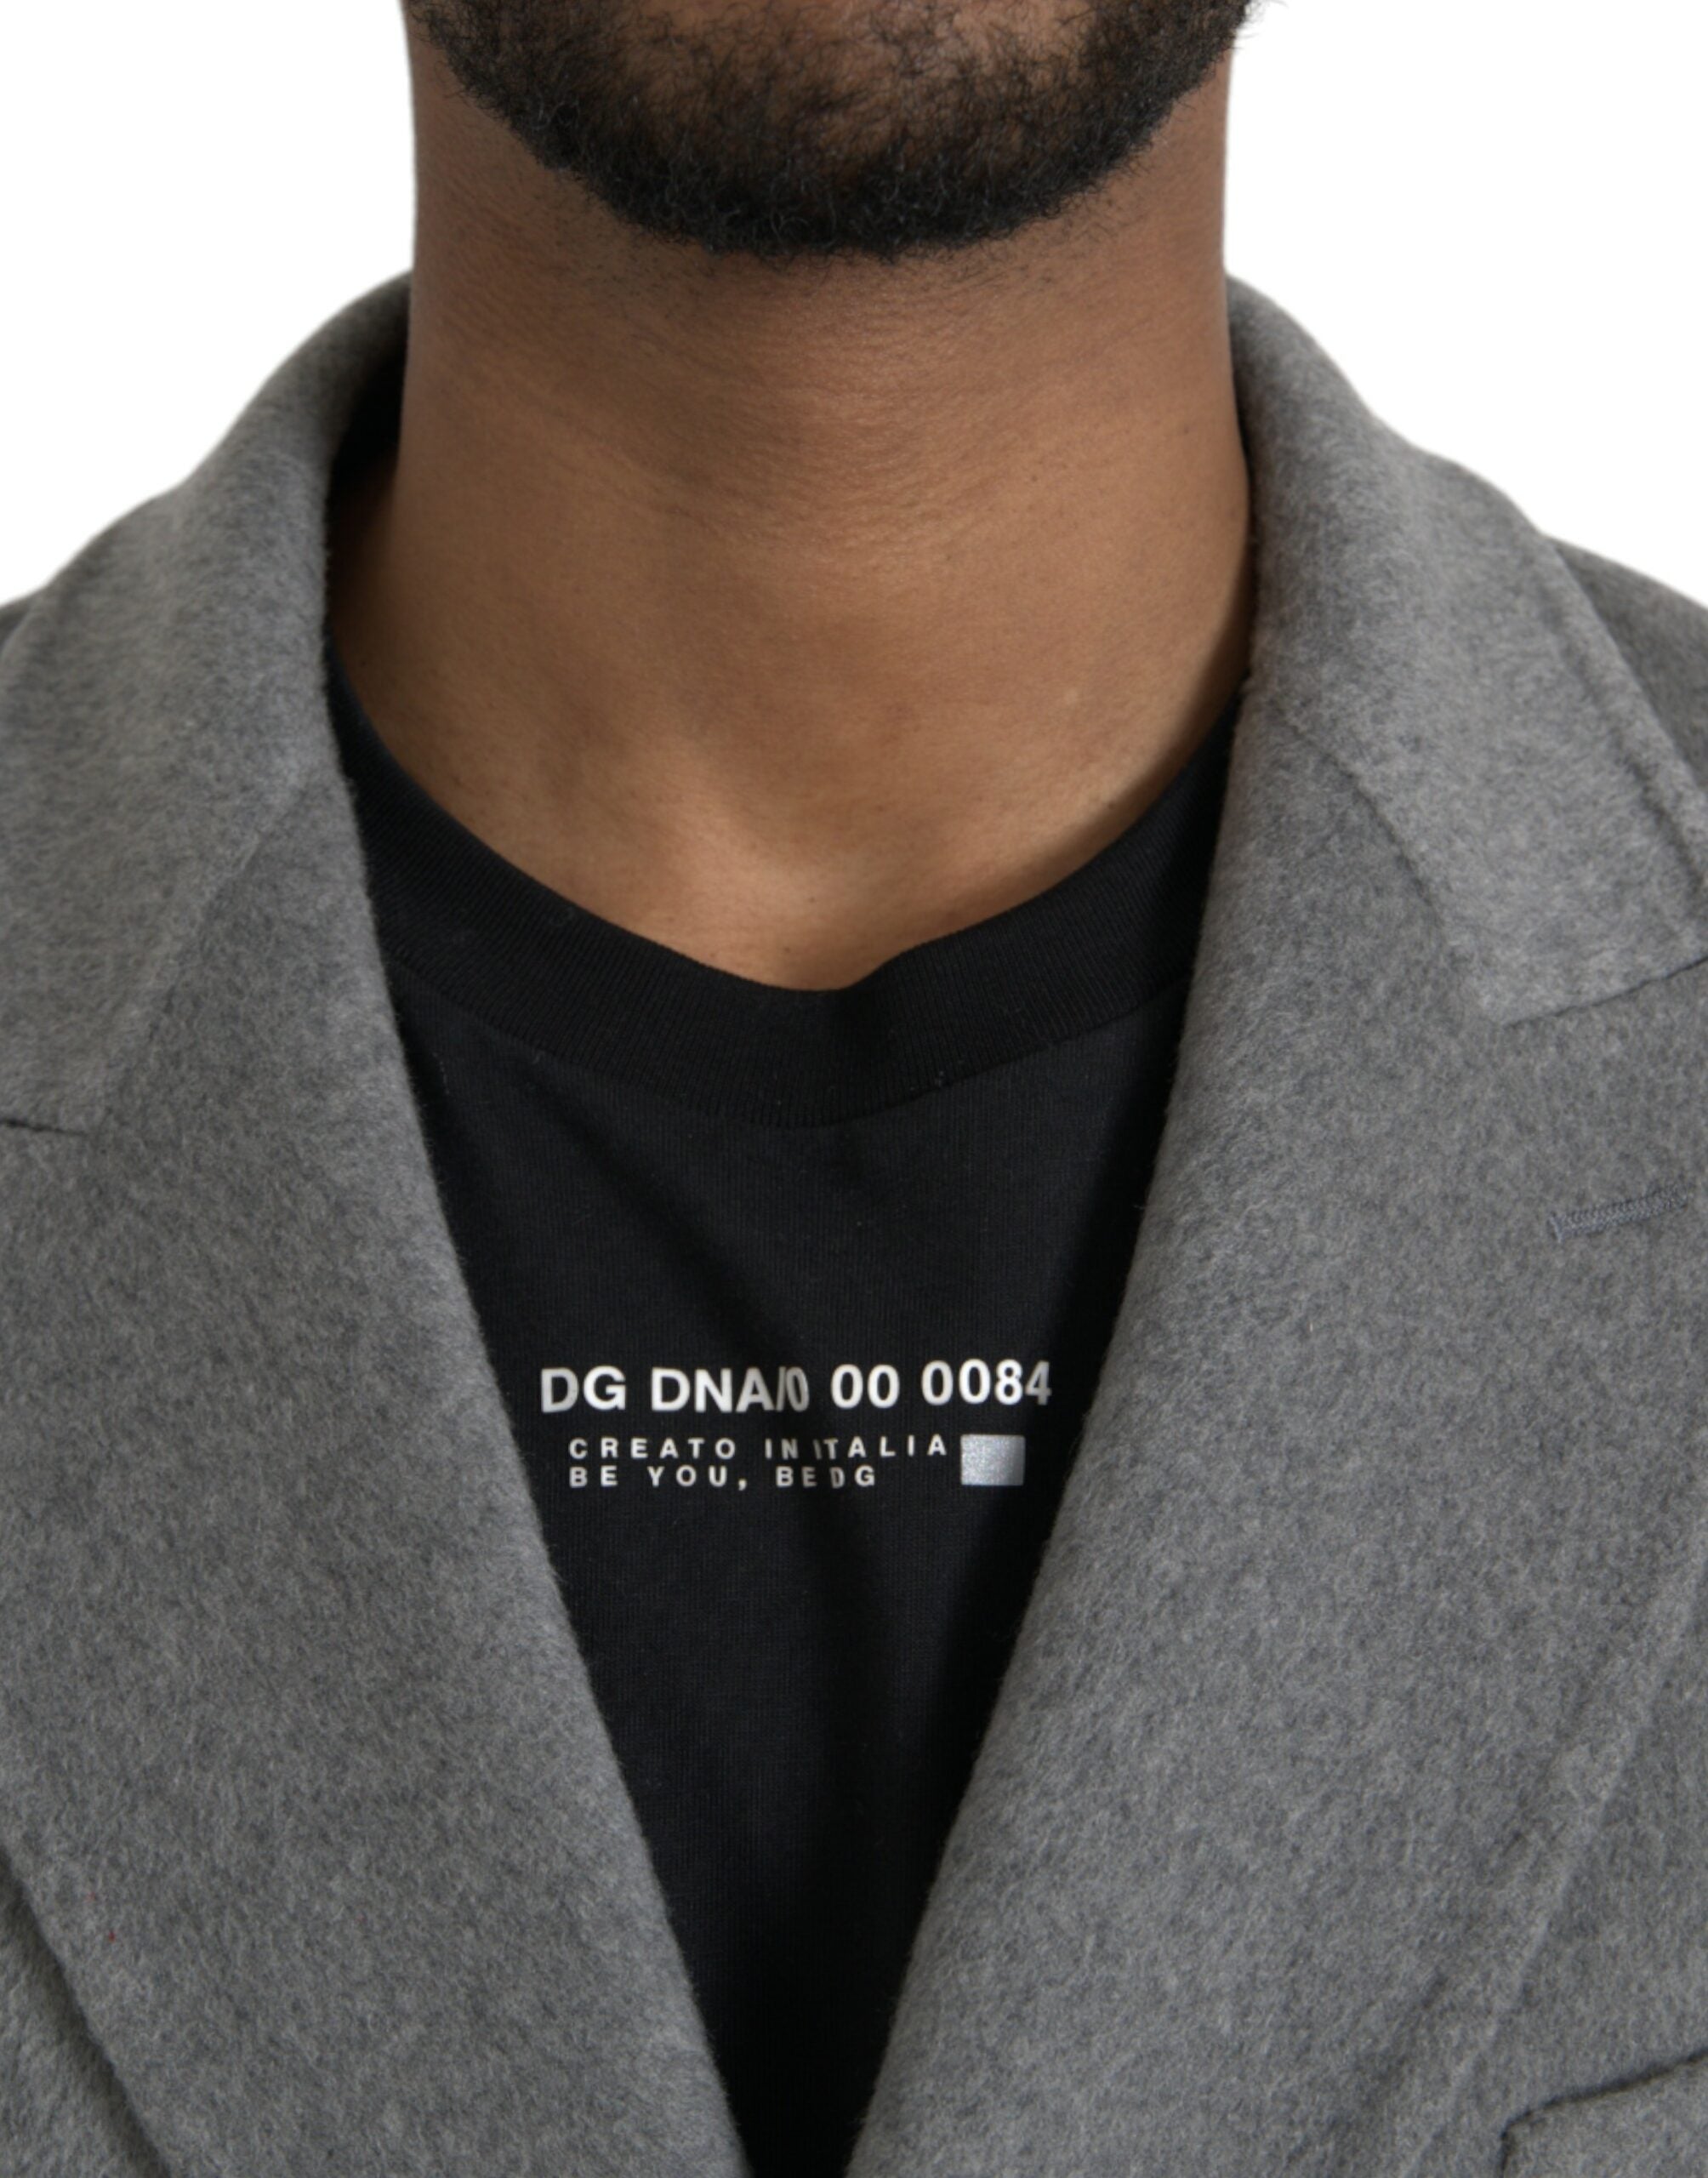 Dolce & Gabbana Grå Double Trench Coat Cashmere Jakke & Frakke-Modeoutlet